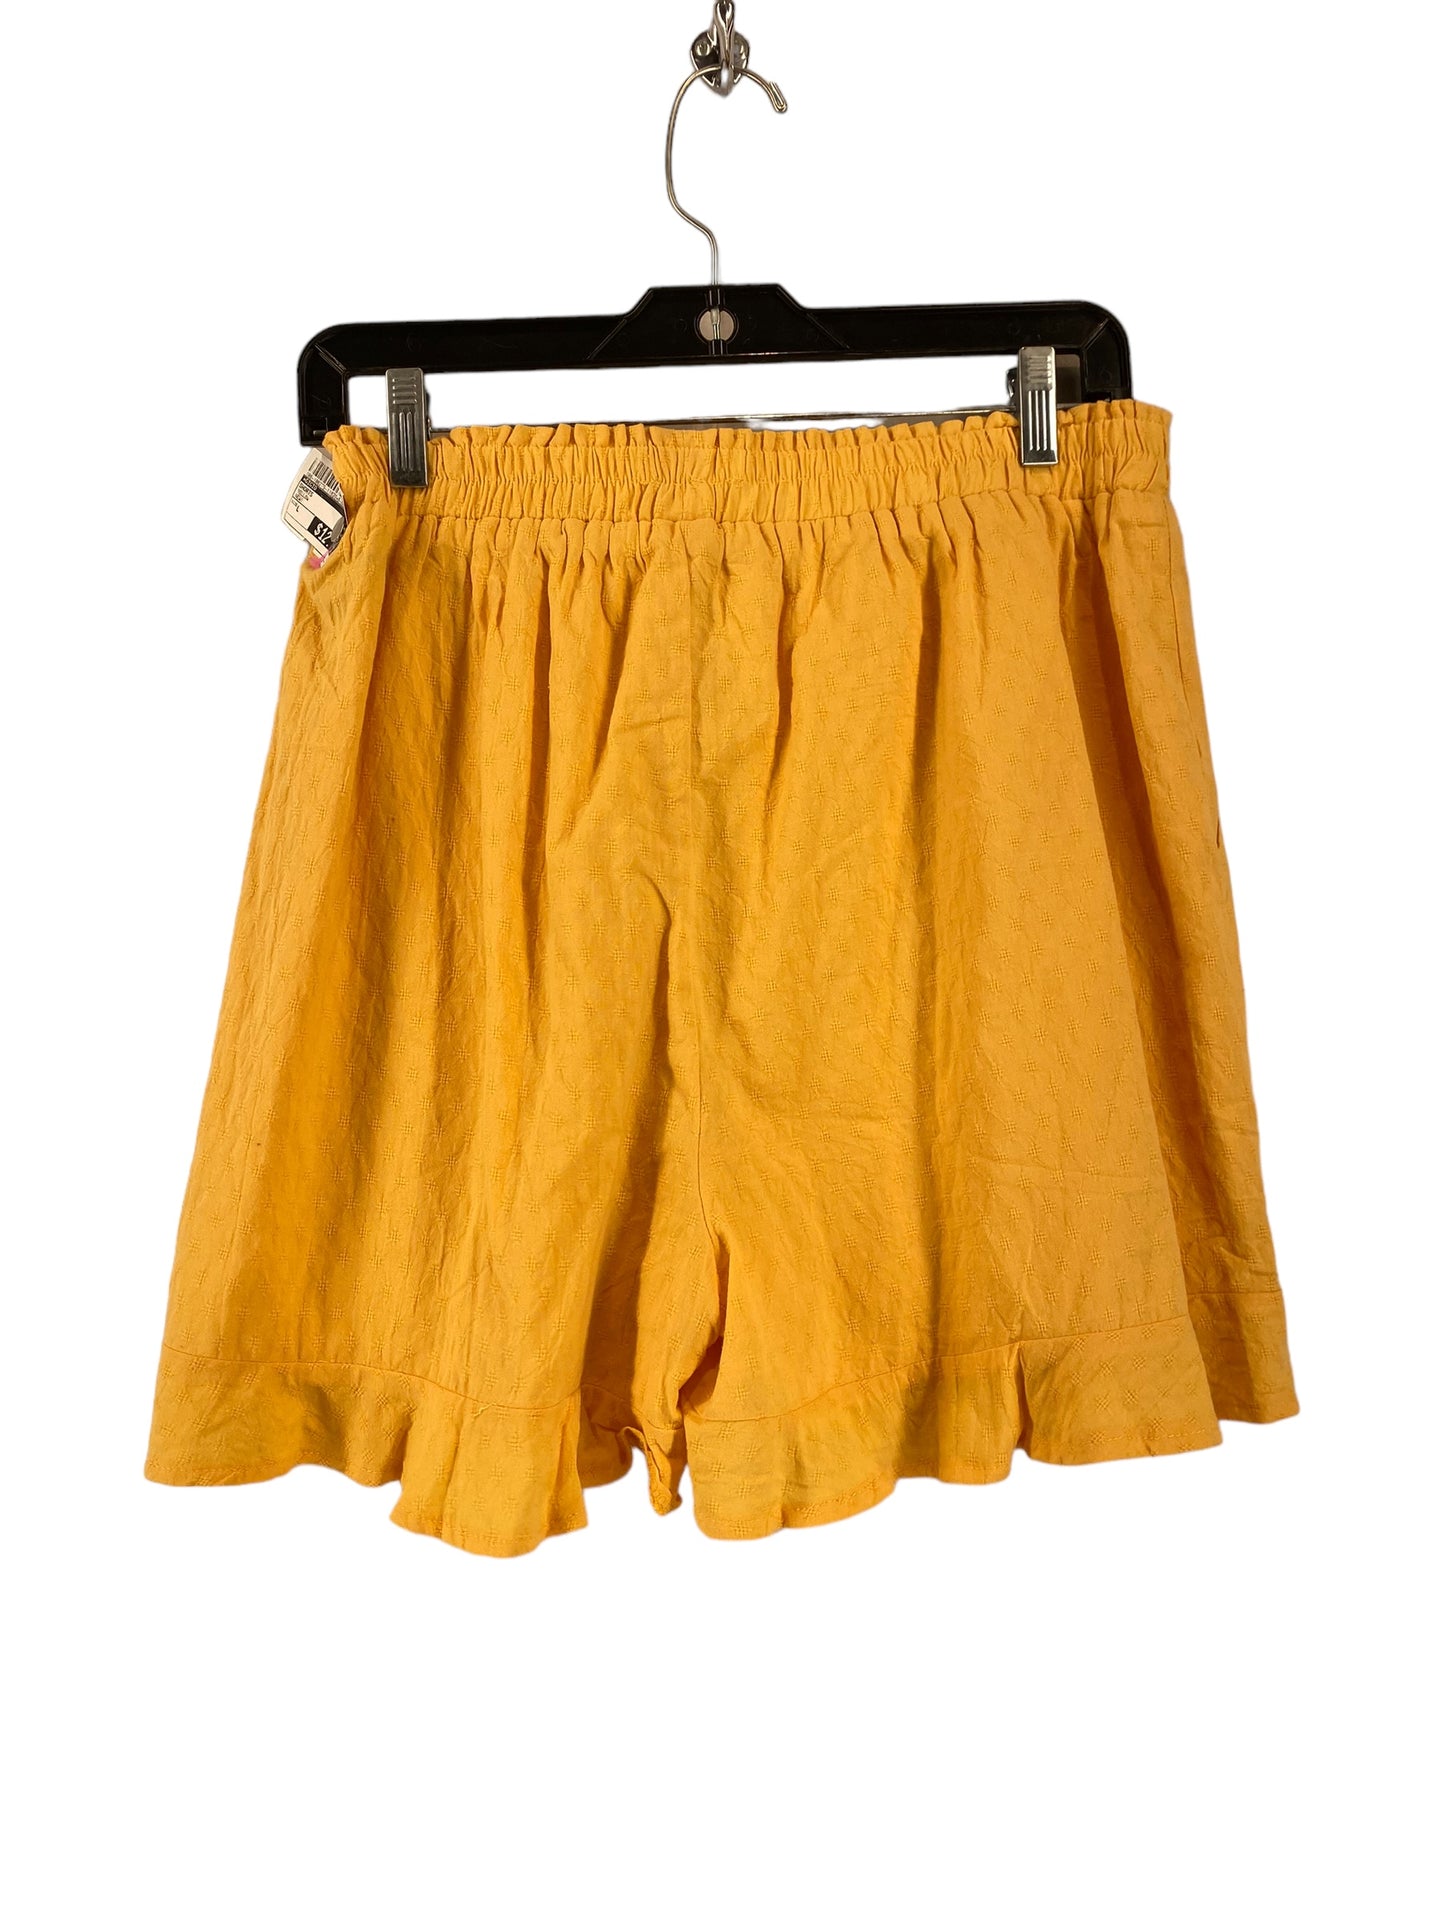 Shorts By Gigio  Size: L